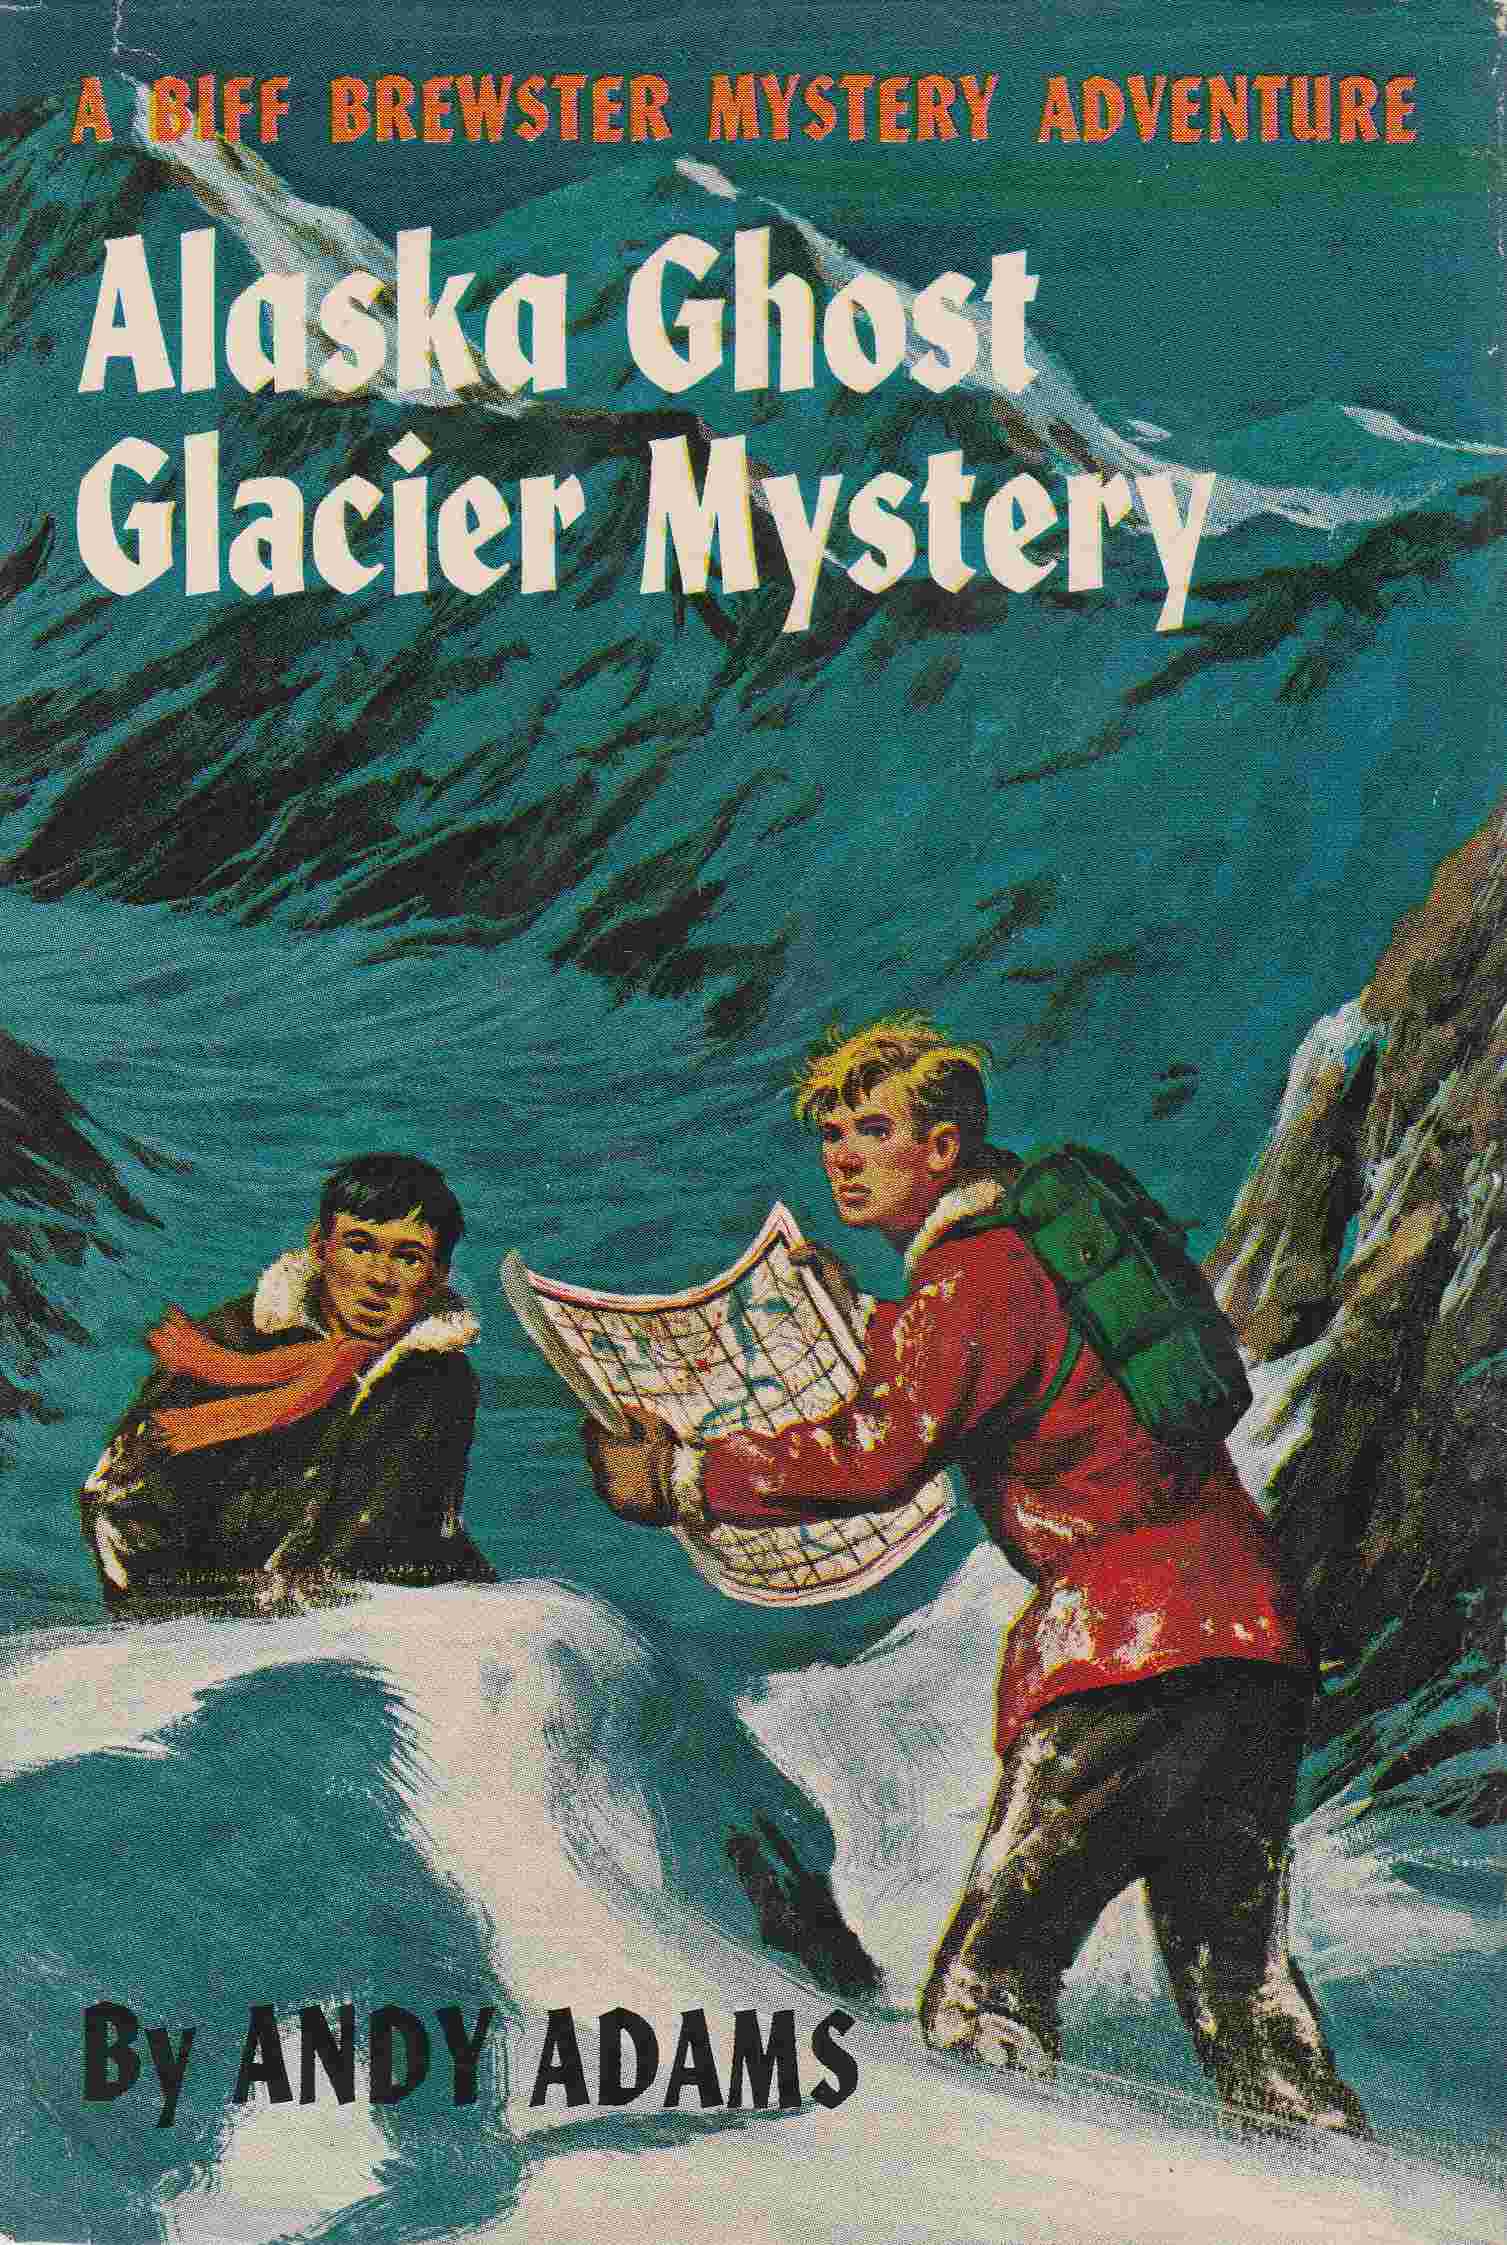 Alaska Ghost Glacier Mystery